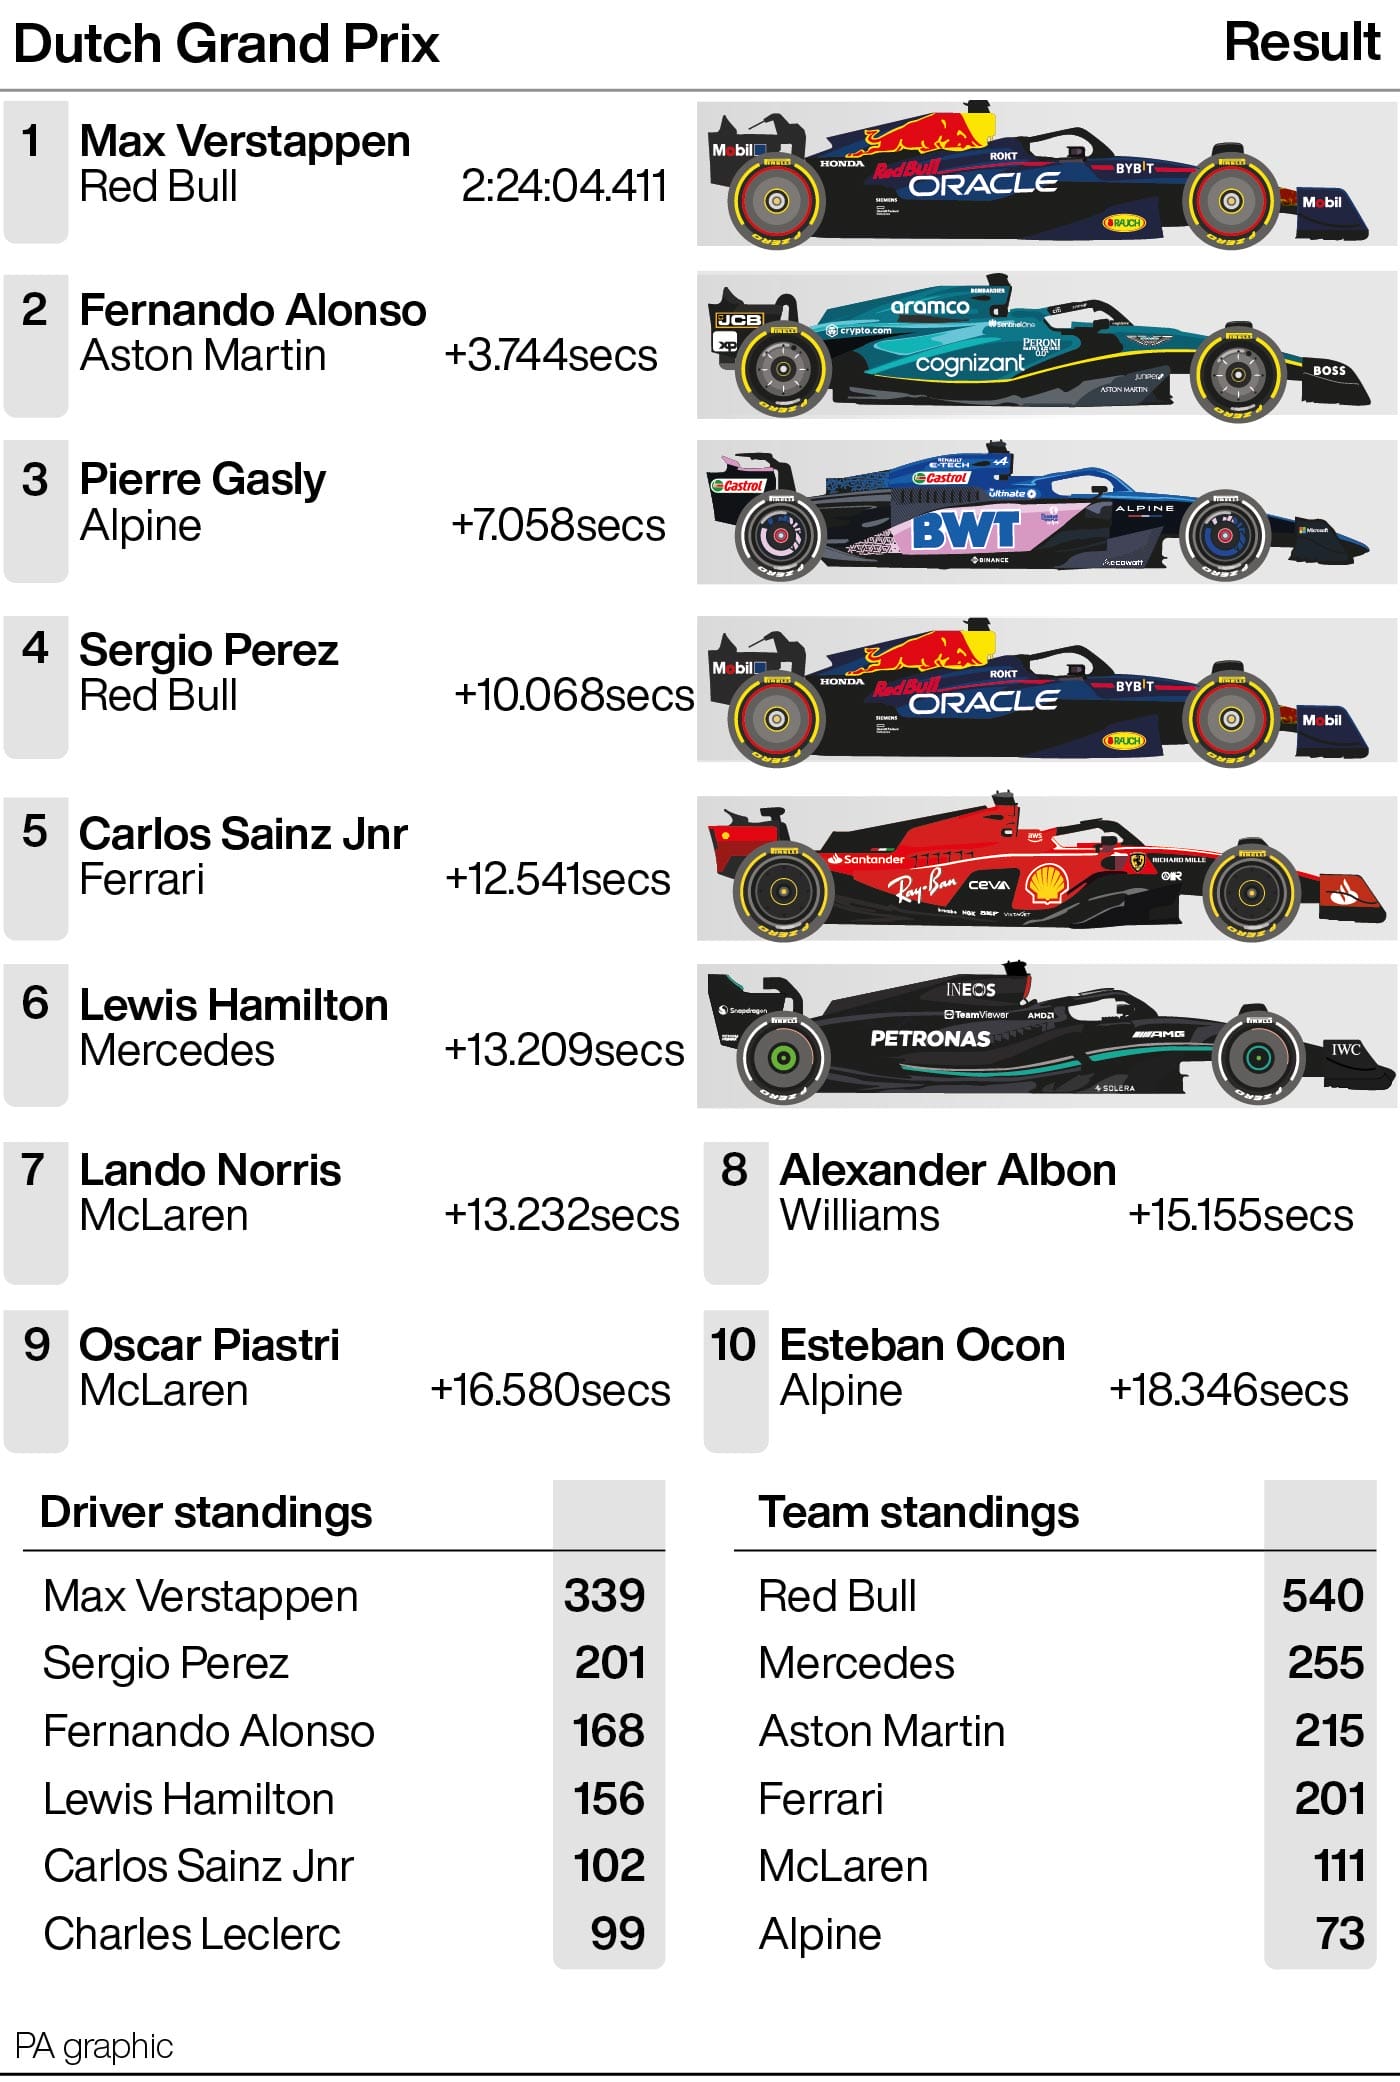 F1 Preview - Italian Grand Prix - The Gambling Times